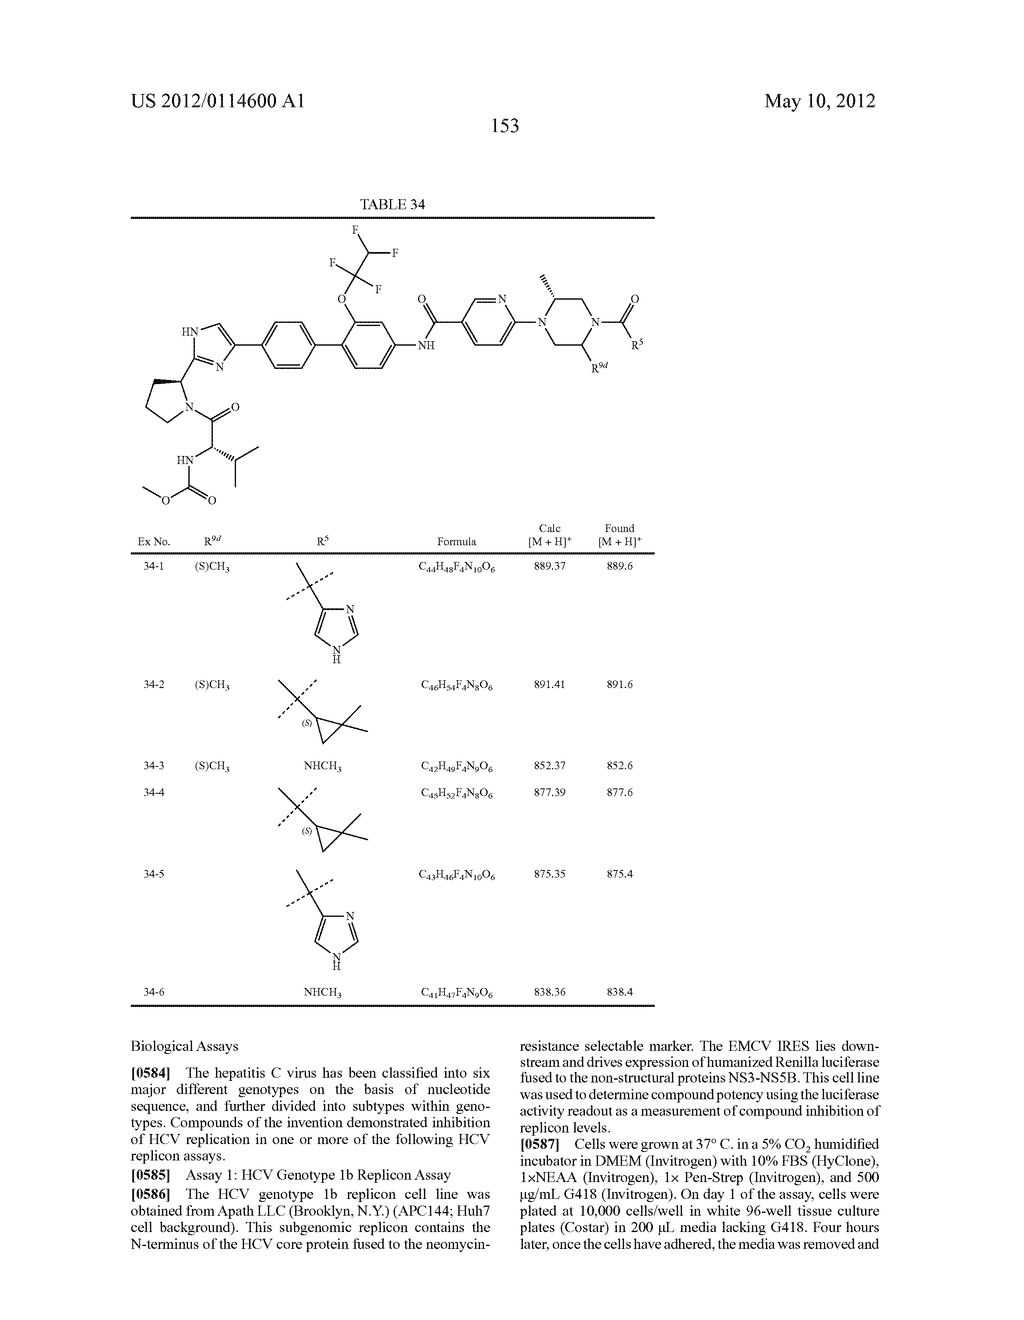 NOVEL INHIBITORS OF HEPATITIS C VIRUS - diagram, schematic, and image 154